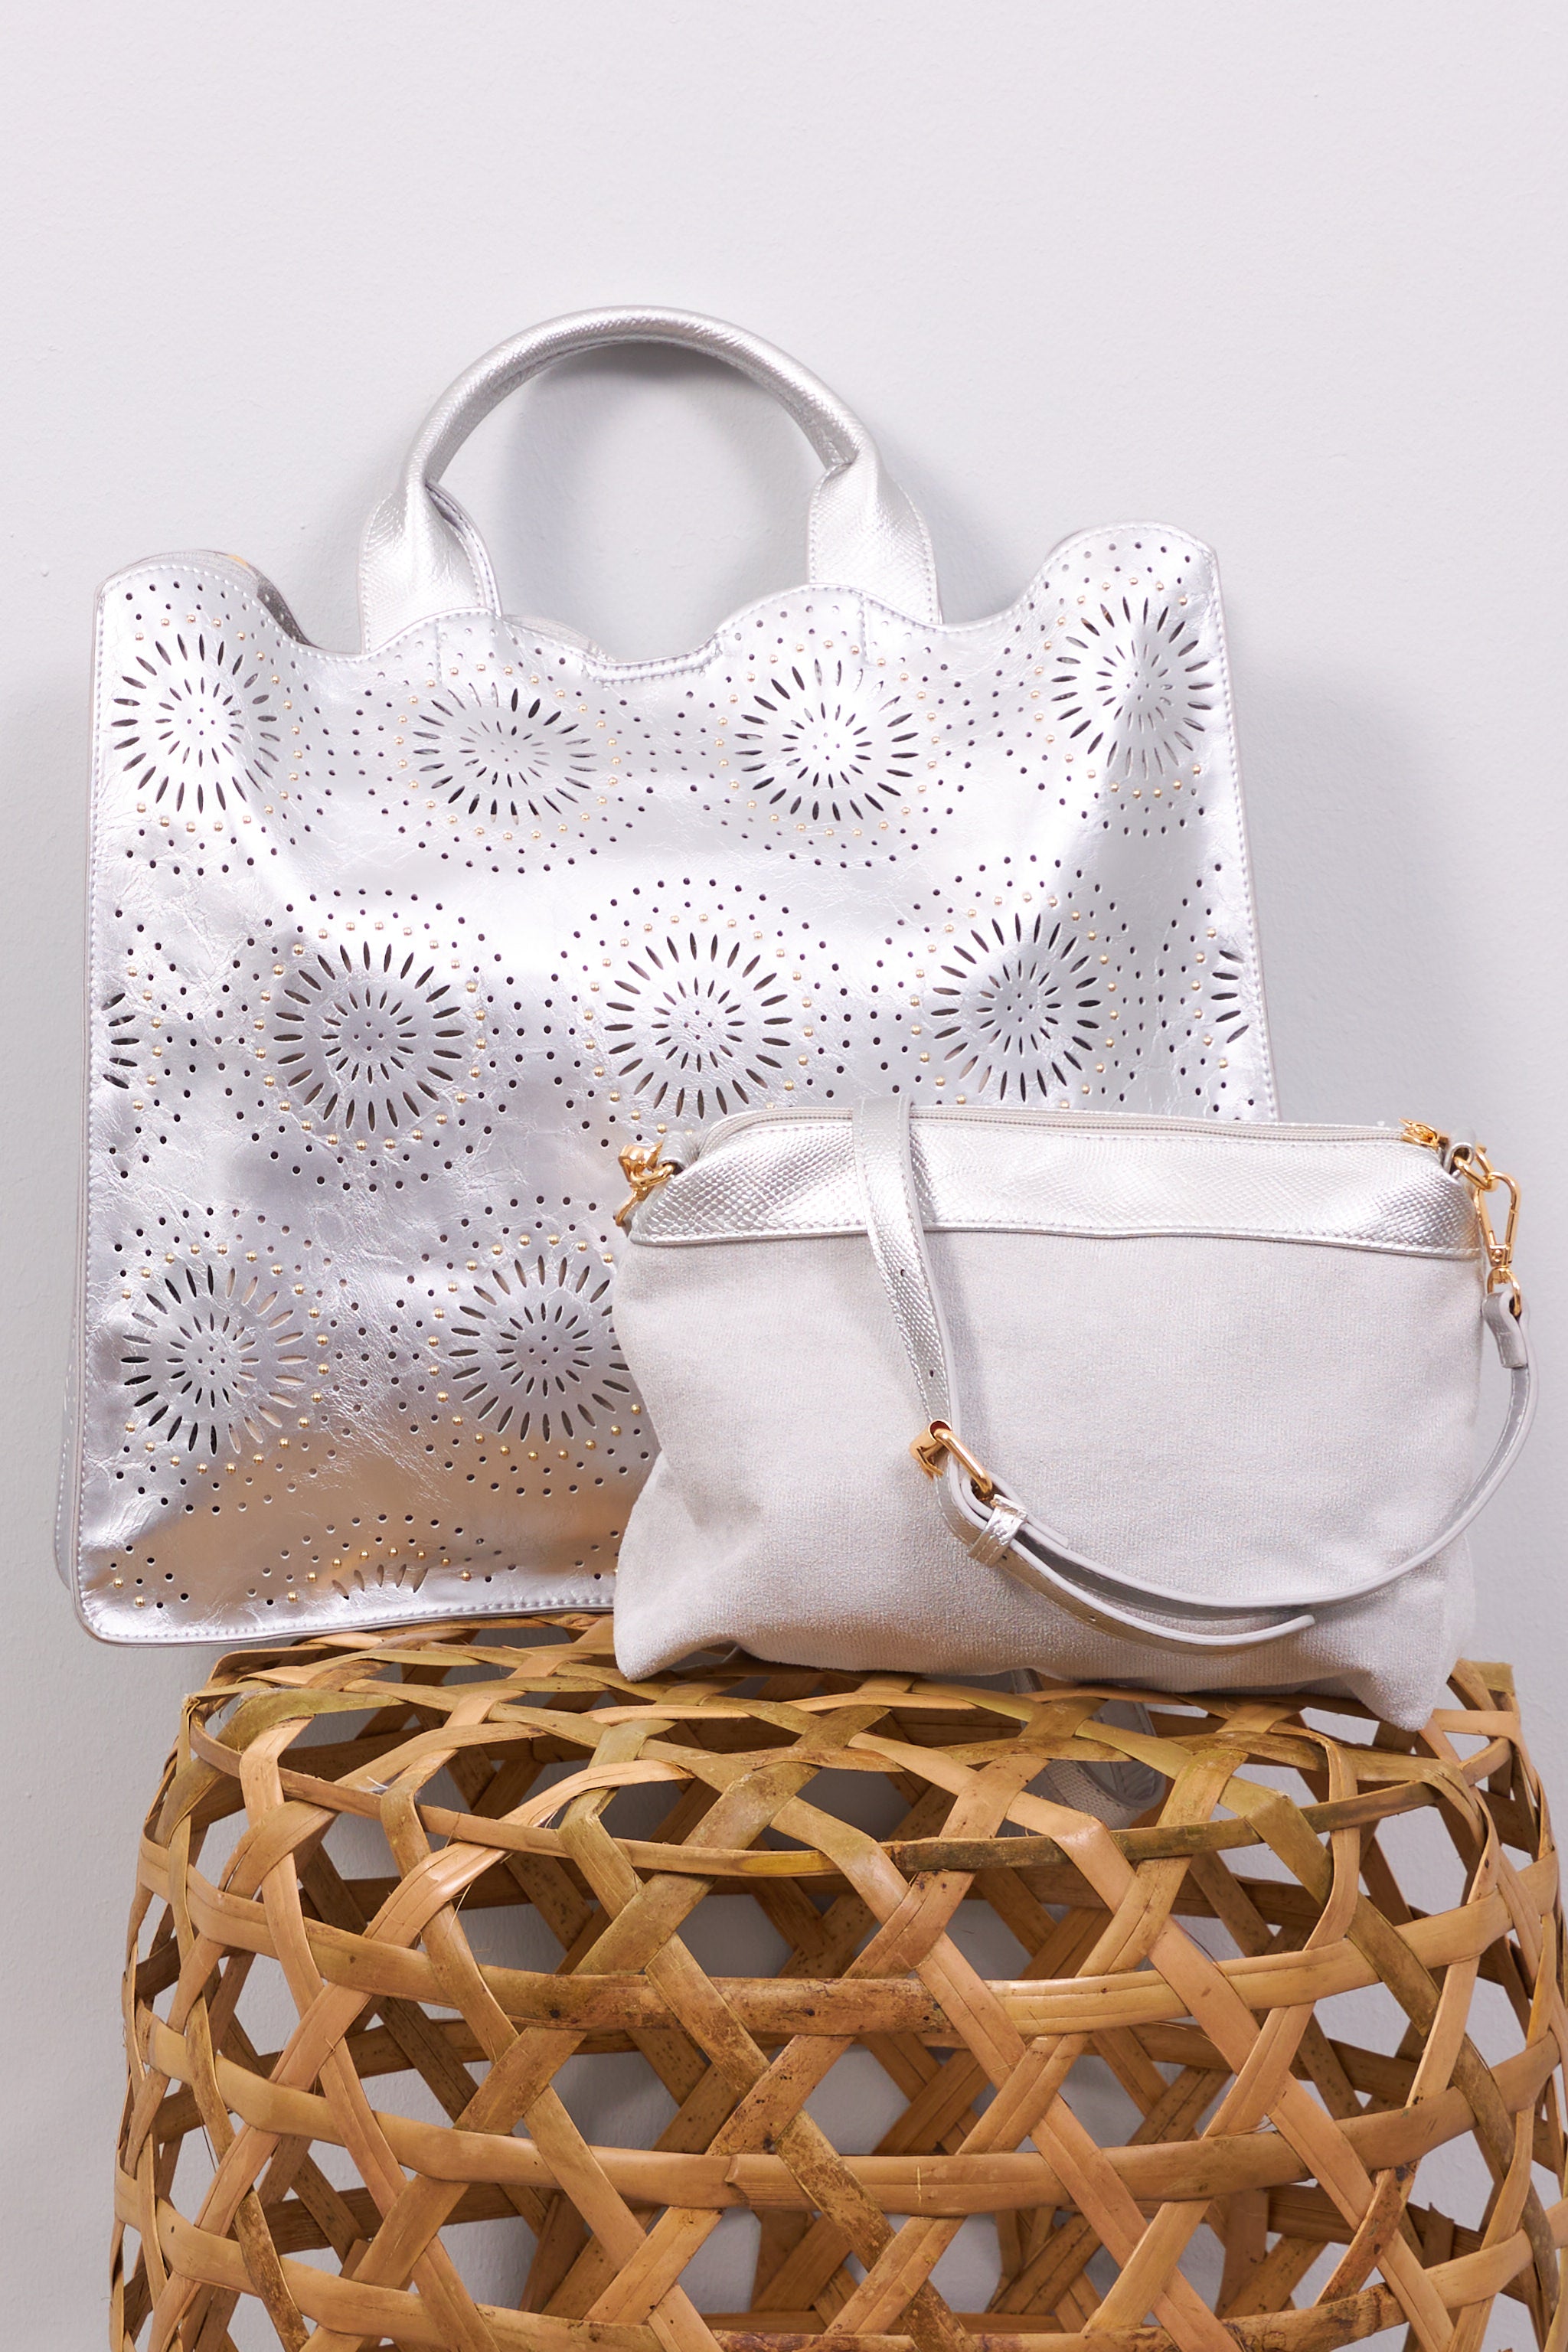 Shopper bag in bag with circle motif, silver metallic